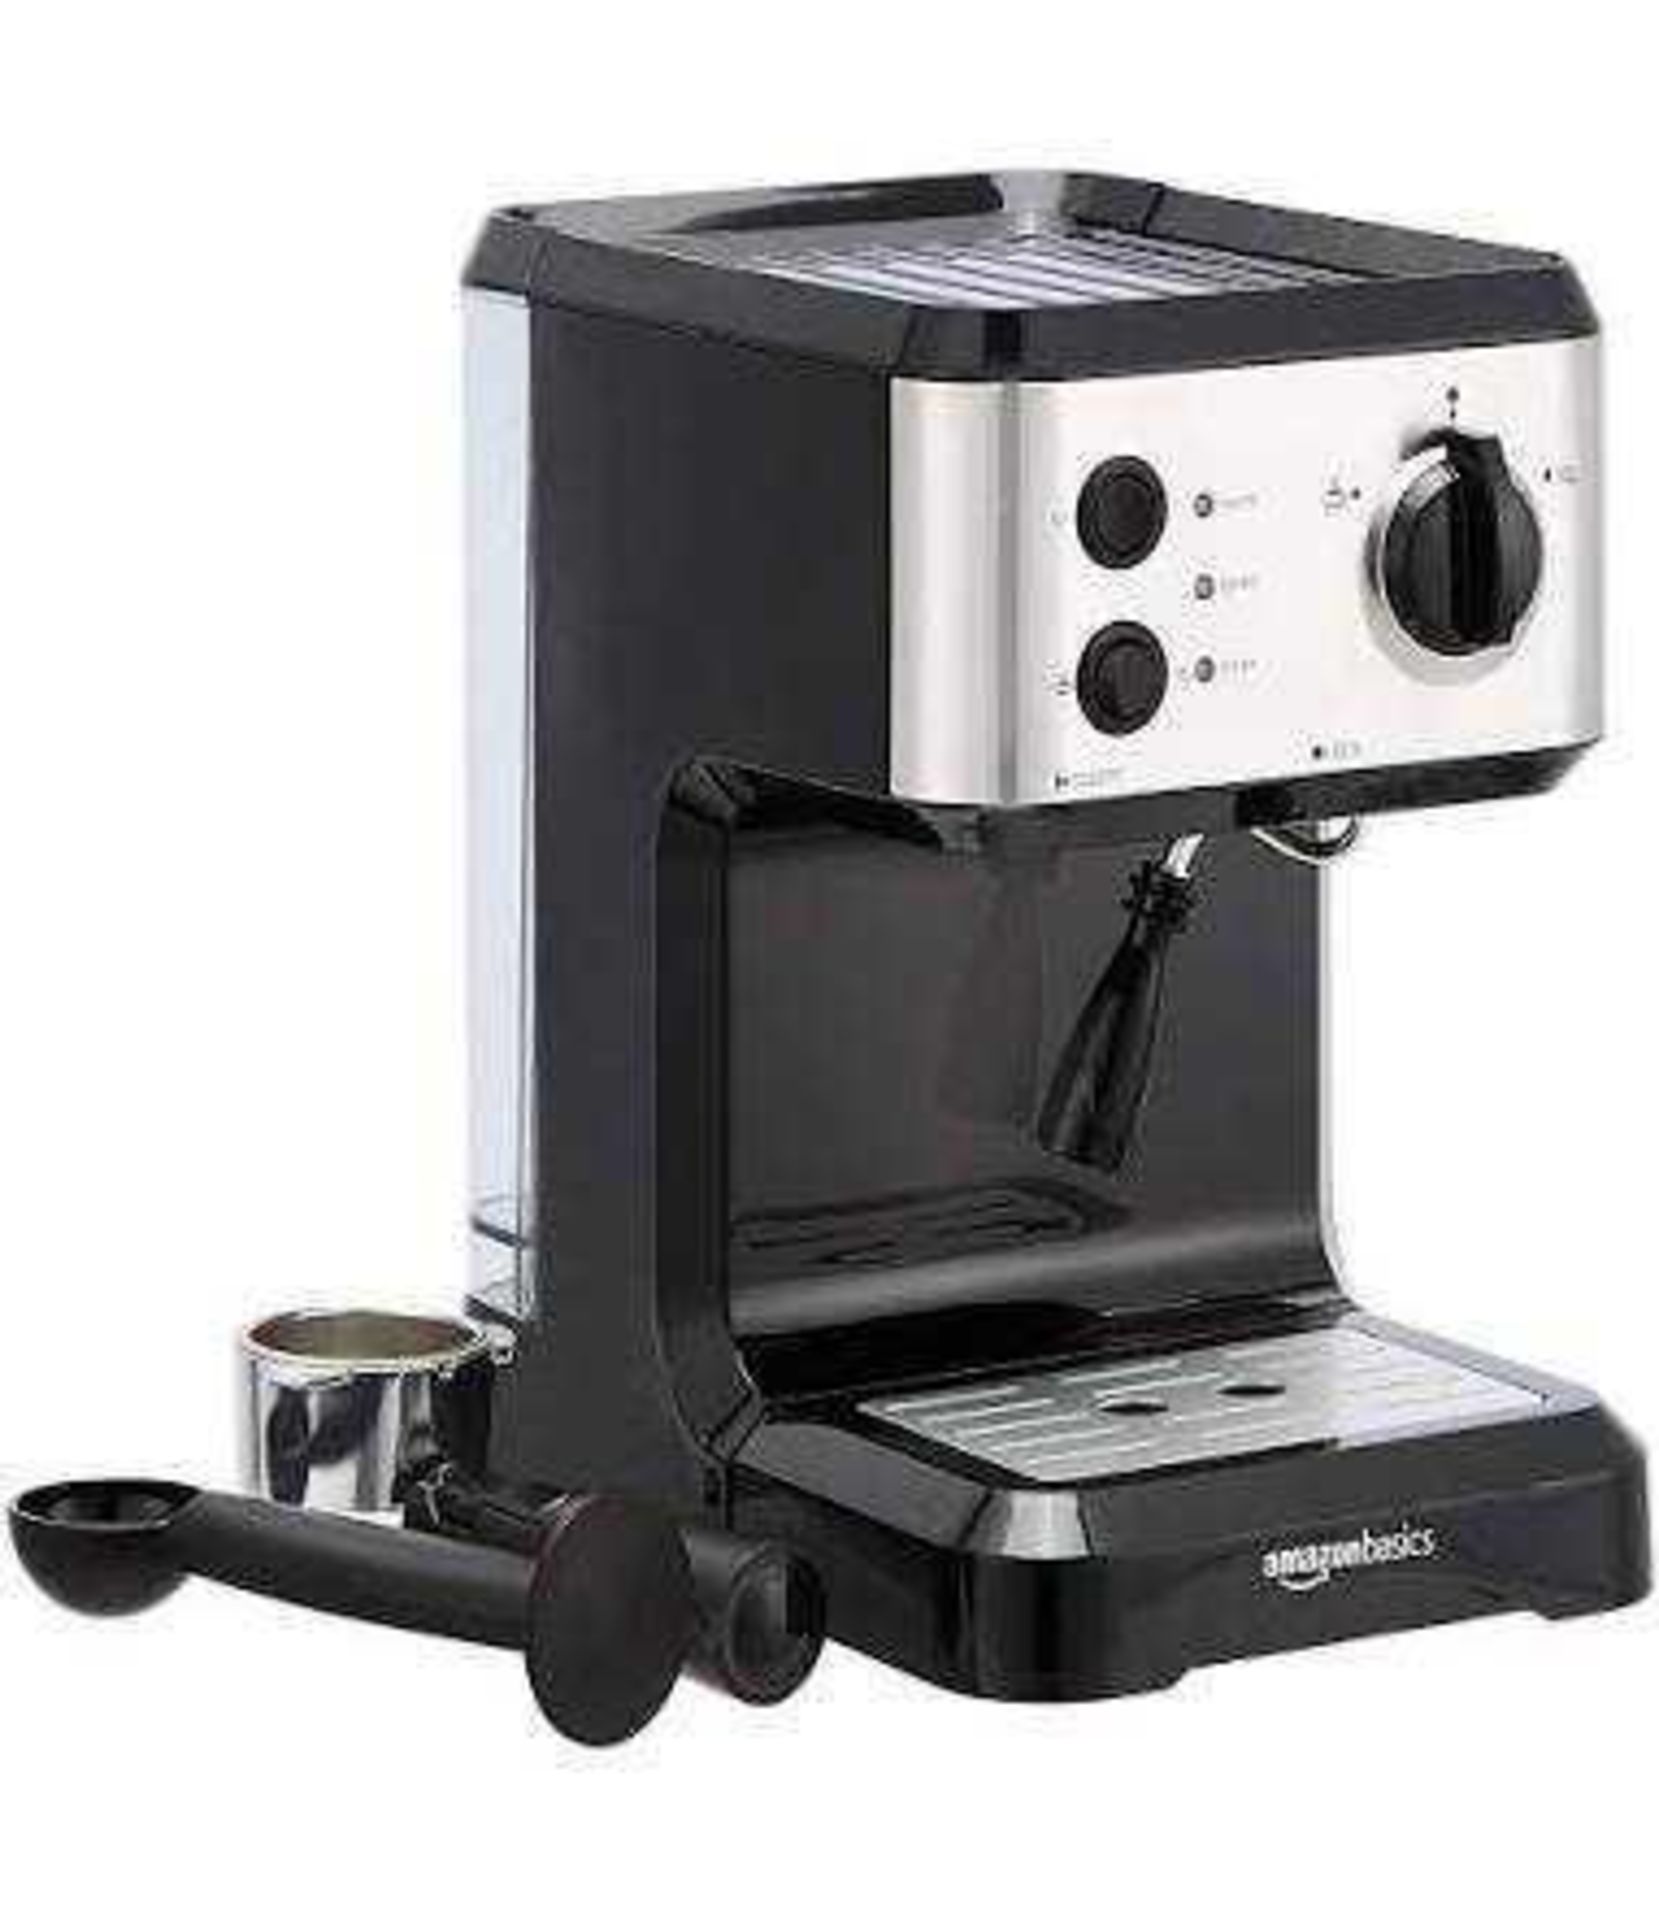 RRP £200 Lot To Contain 2X Brand New Amazon Basics Coffee Machine